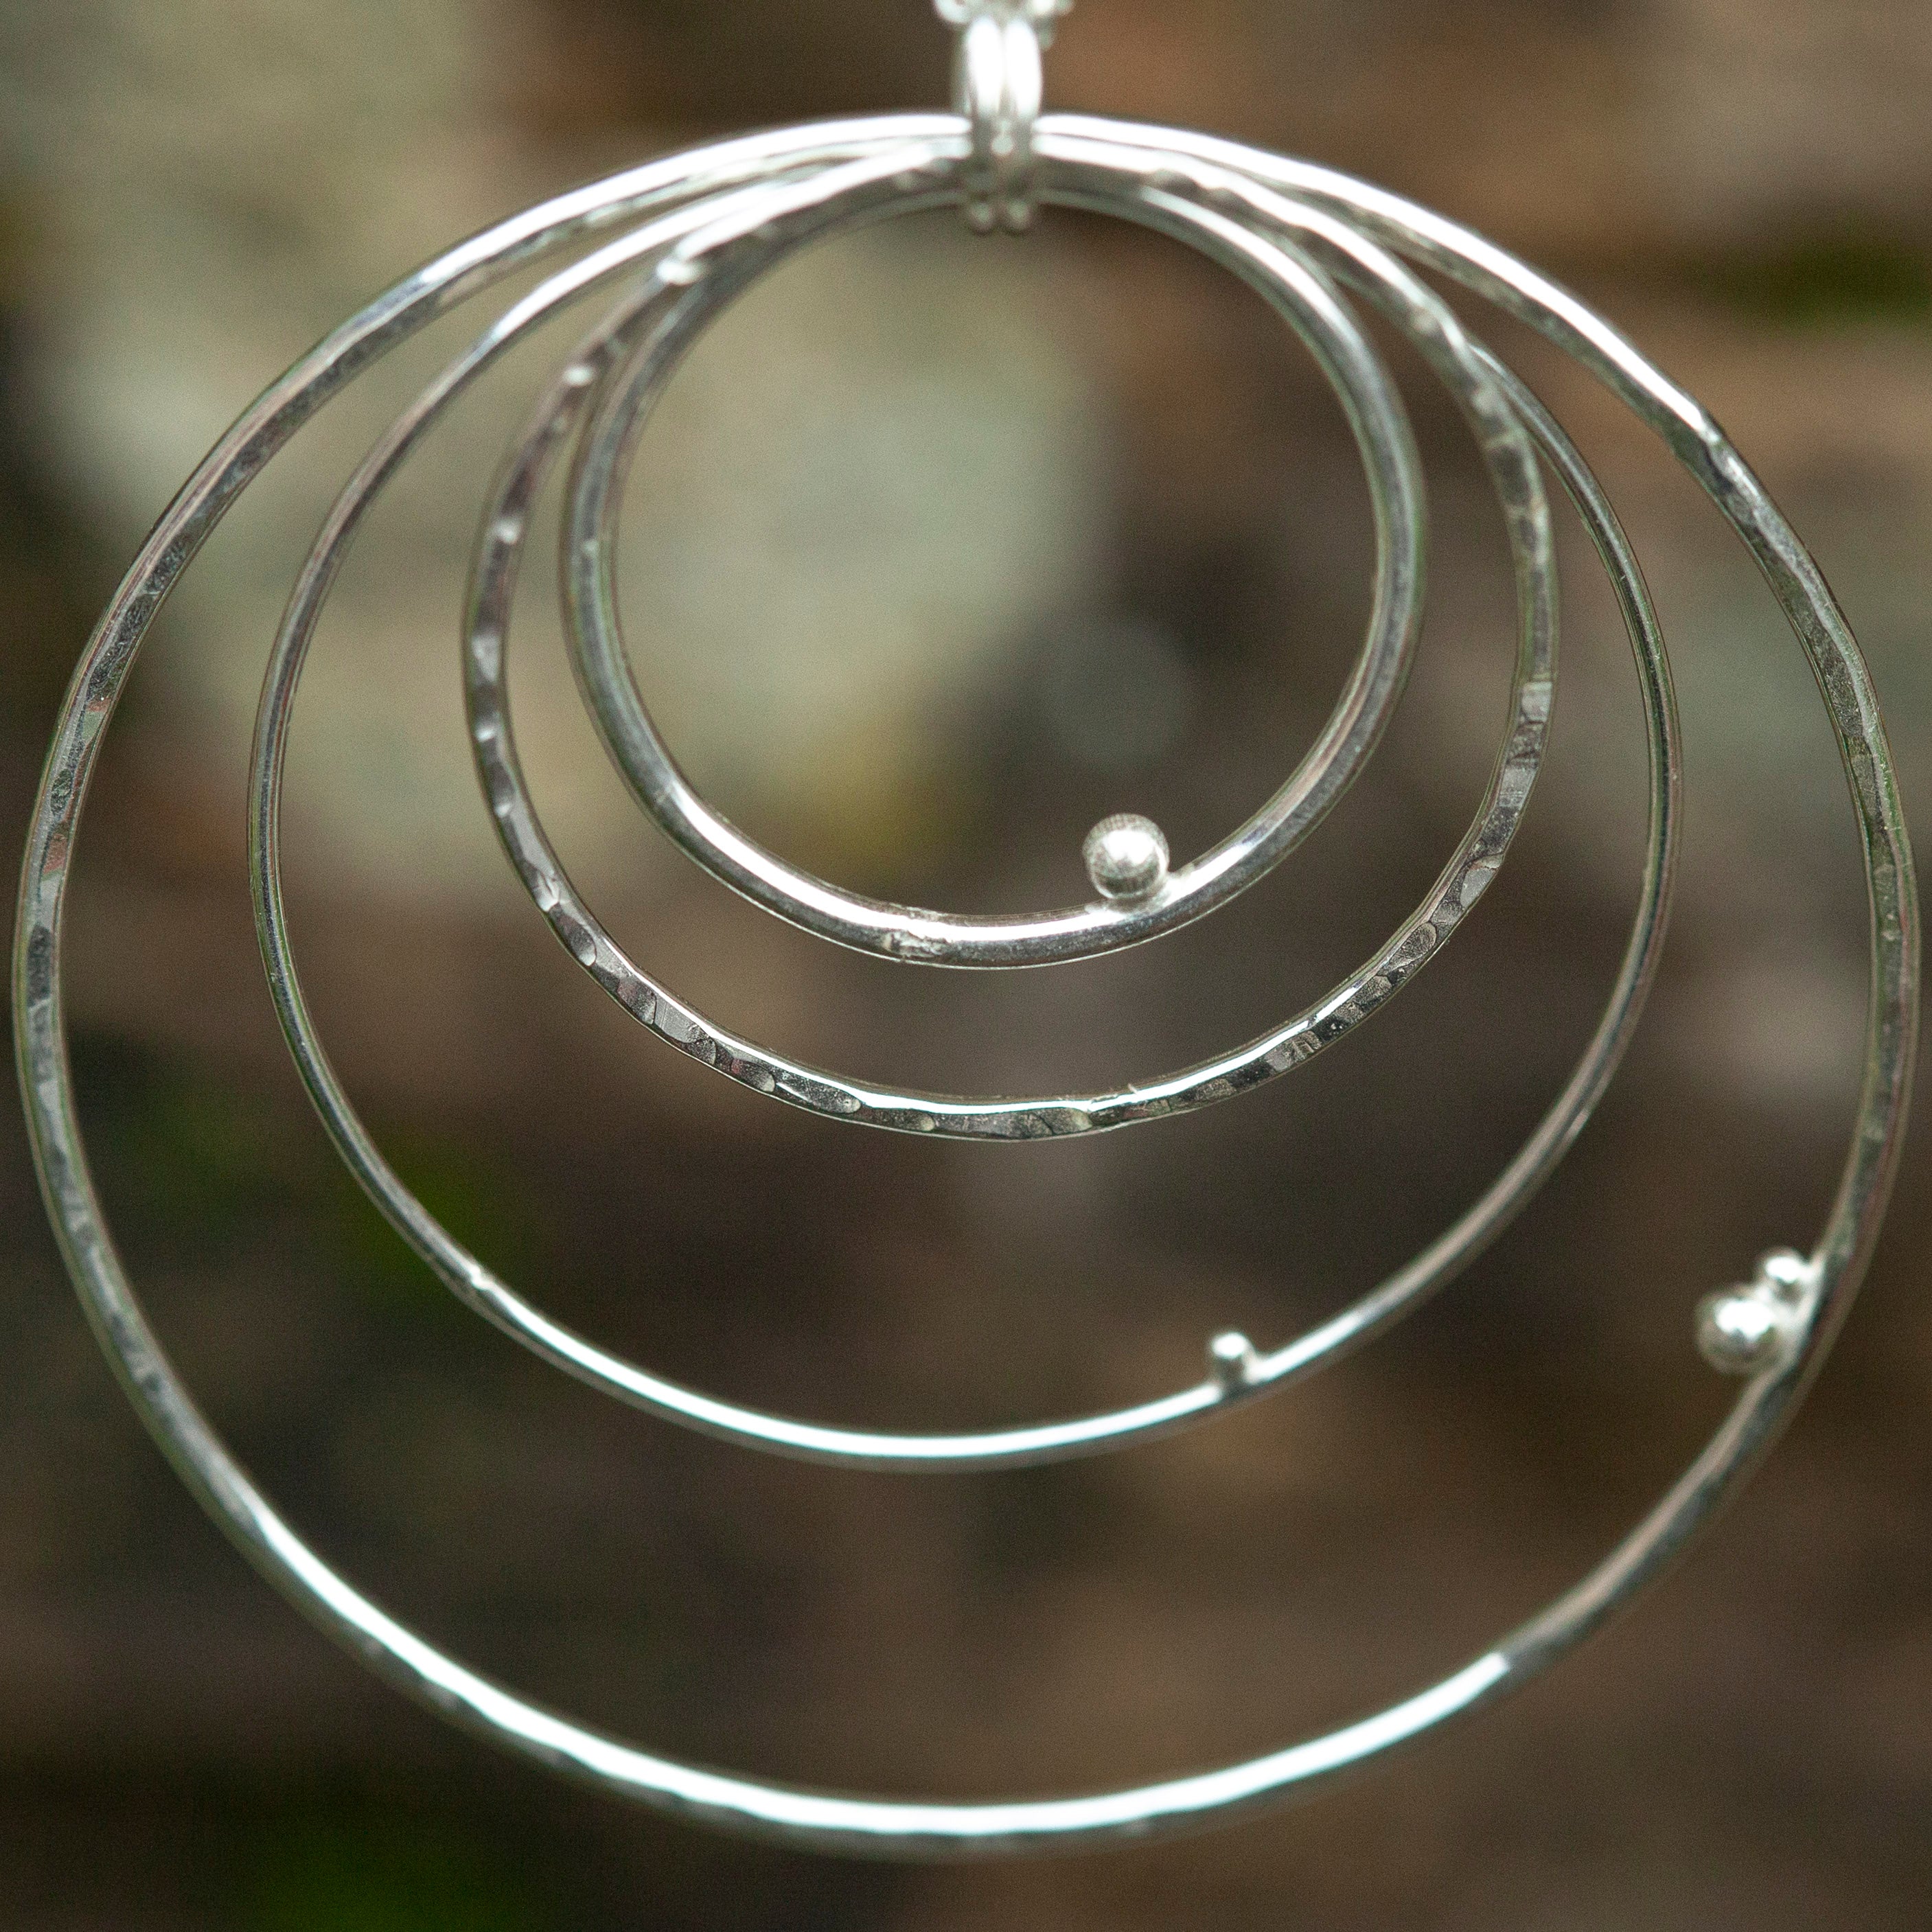 OOAK • Cosmos pendant in silver #1  (ready to ship)